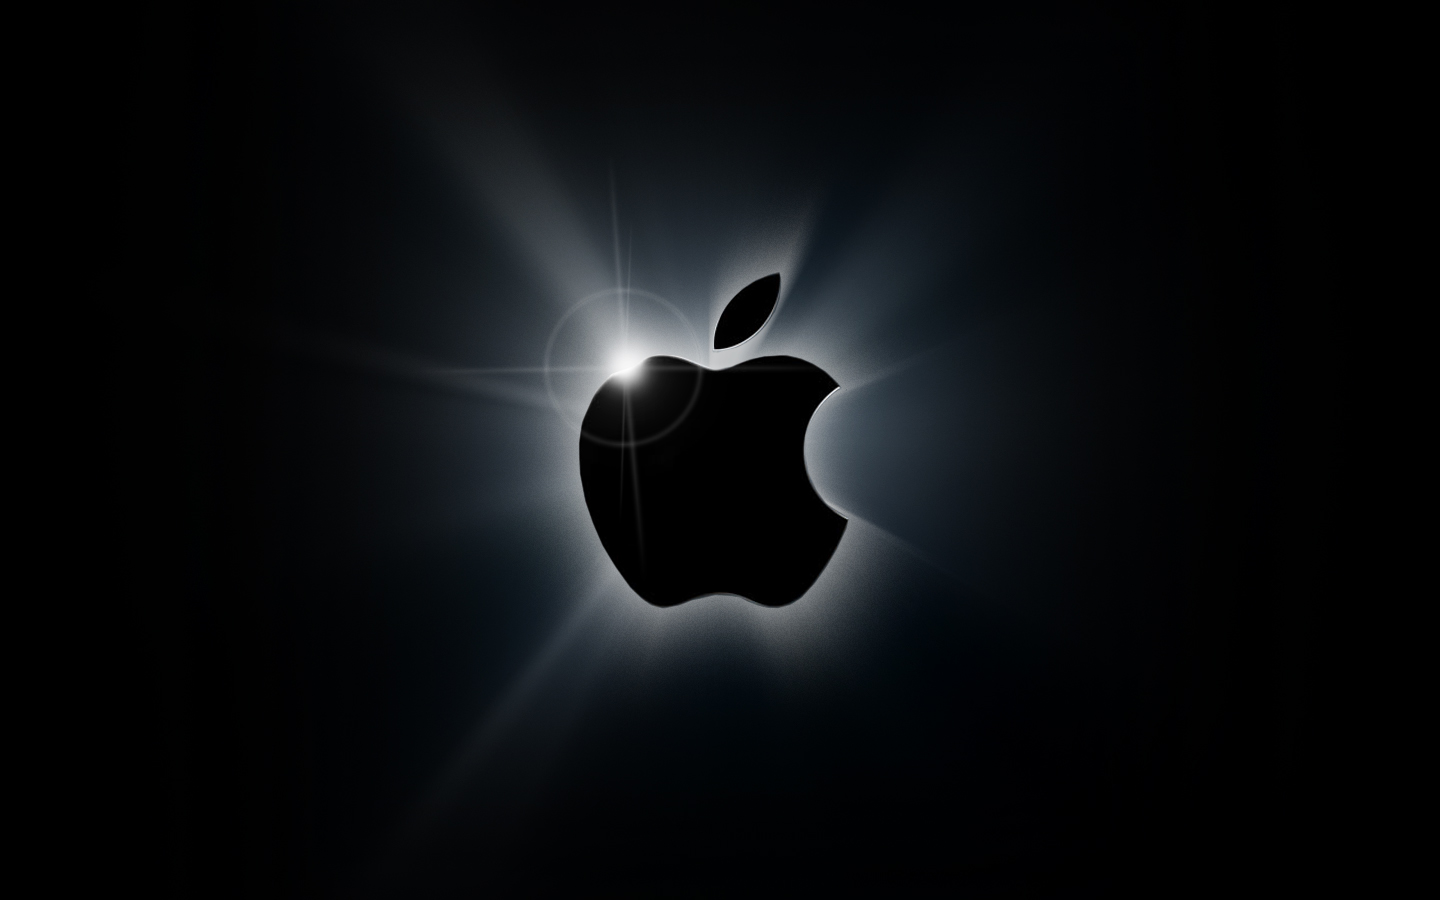 http://2.bp.blogspot.com/-wK6fqIMqZAM/TxVoqC1hNPI/AAAAAAAAAfg/xzgq8Co1jmA/s1600/apple-black-logo-wallpaper.jpg